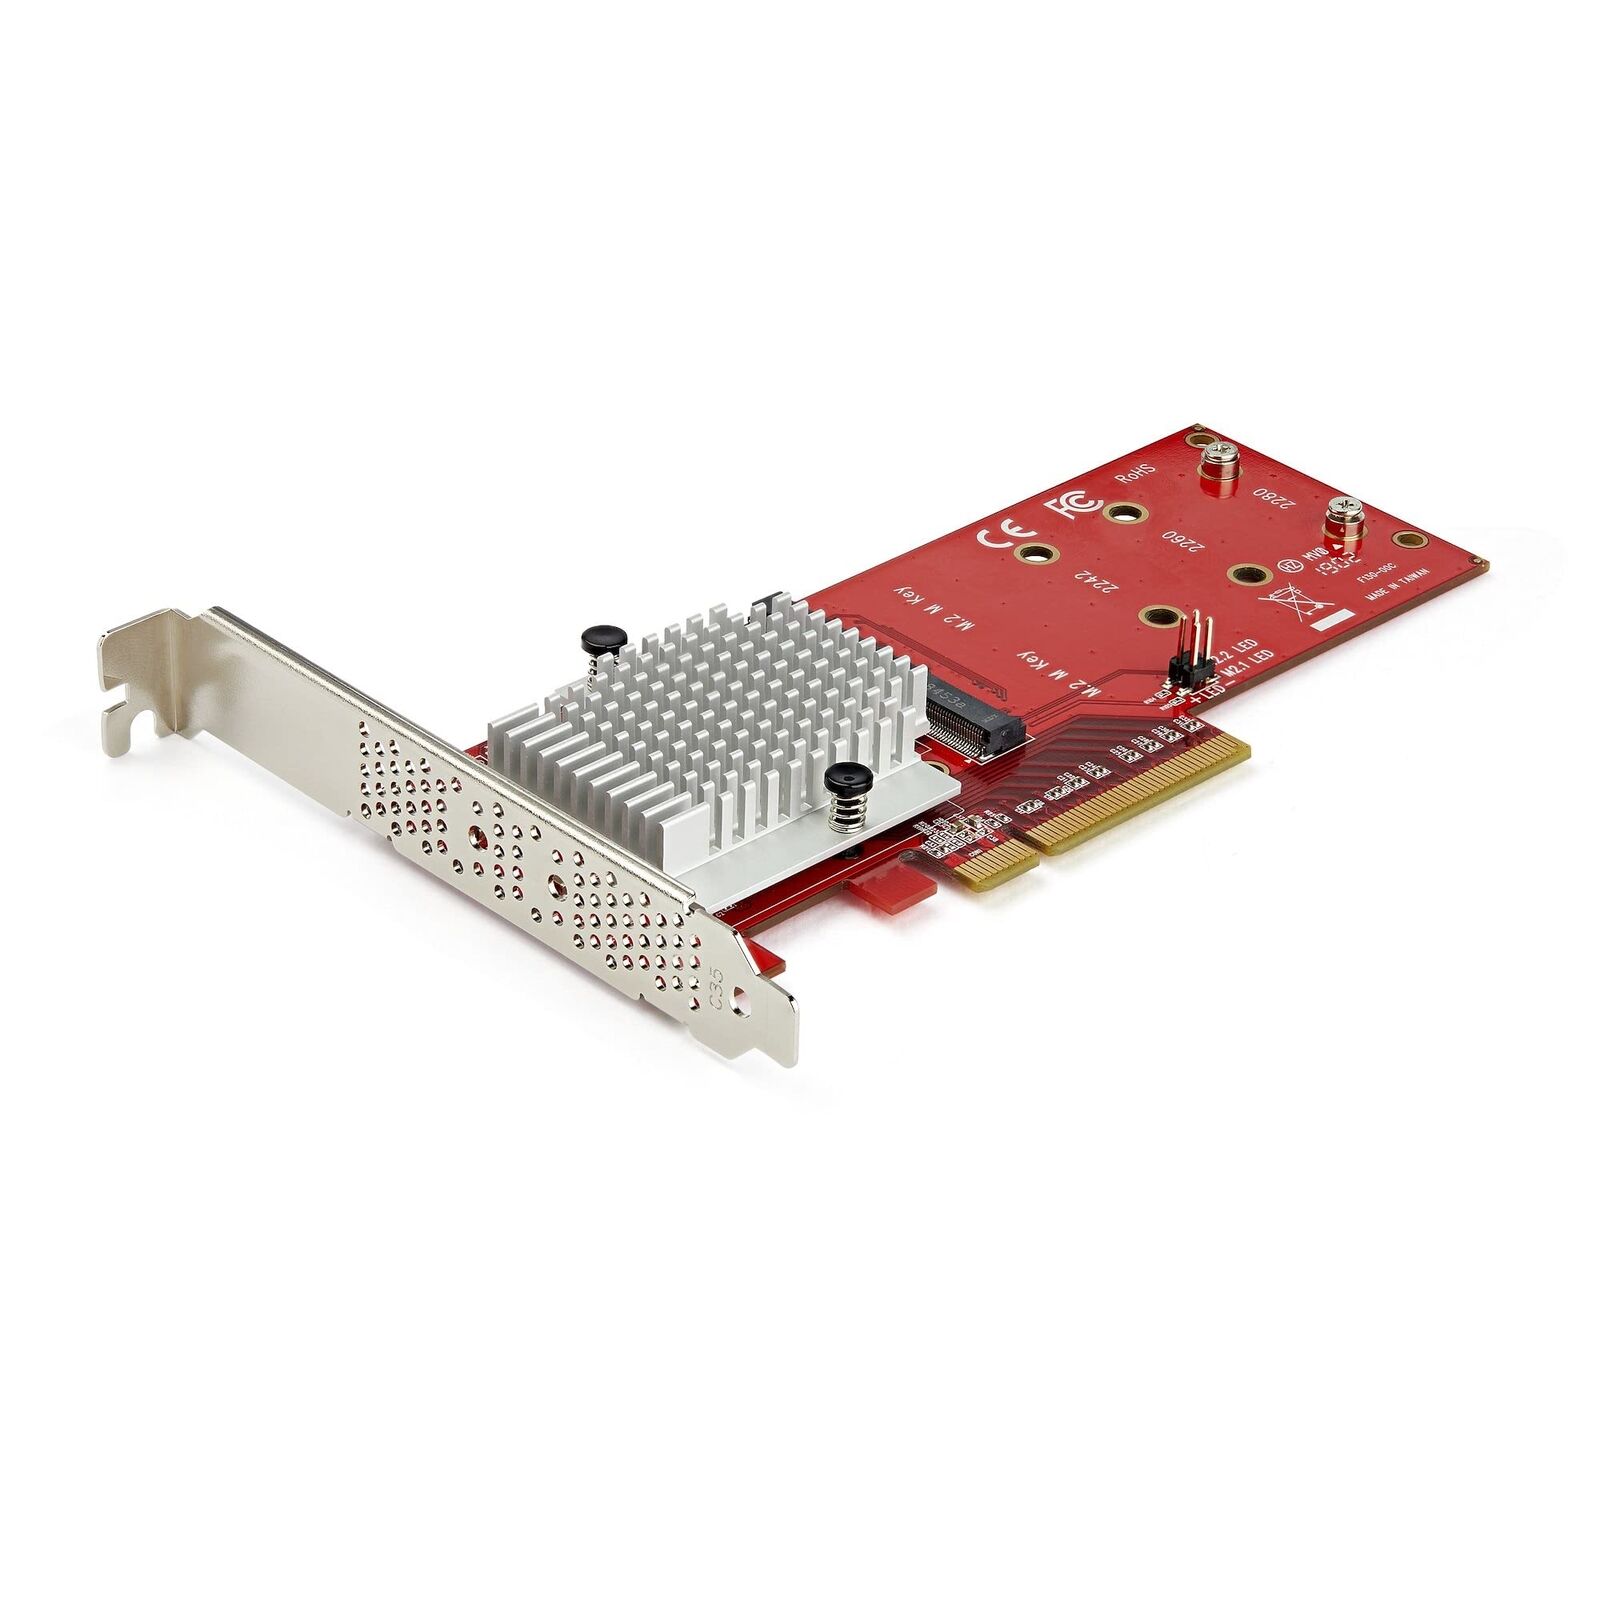 StarTech.com Dual M.2 PCIe SSD Adapter Card - x8 / x16 Dual NVMe or AHCI M.2 SSD